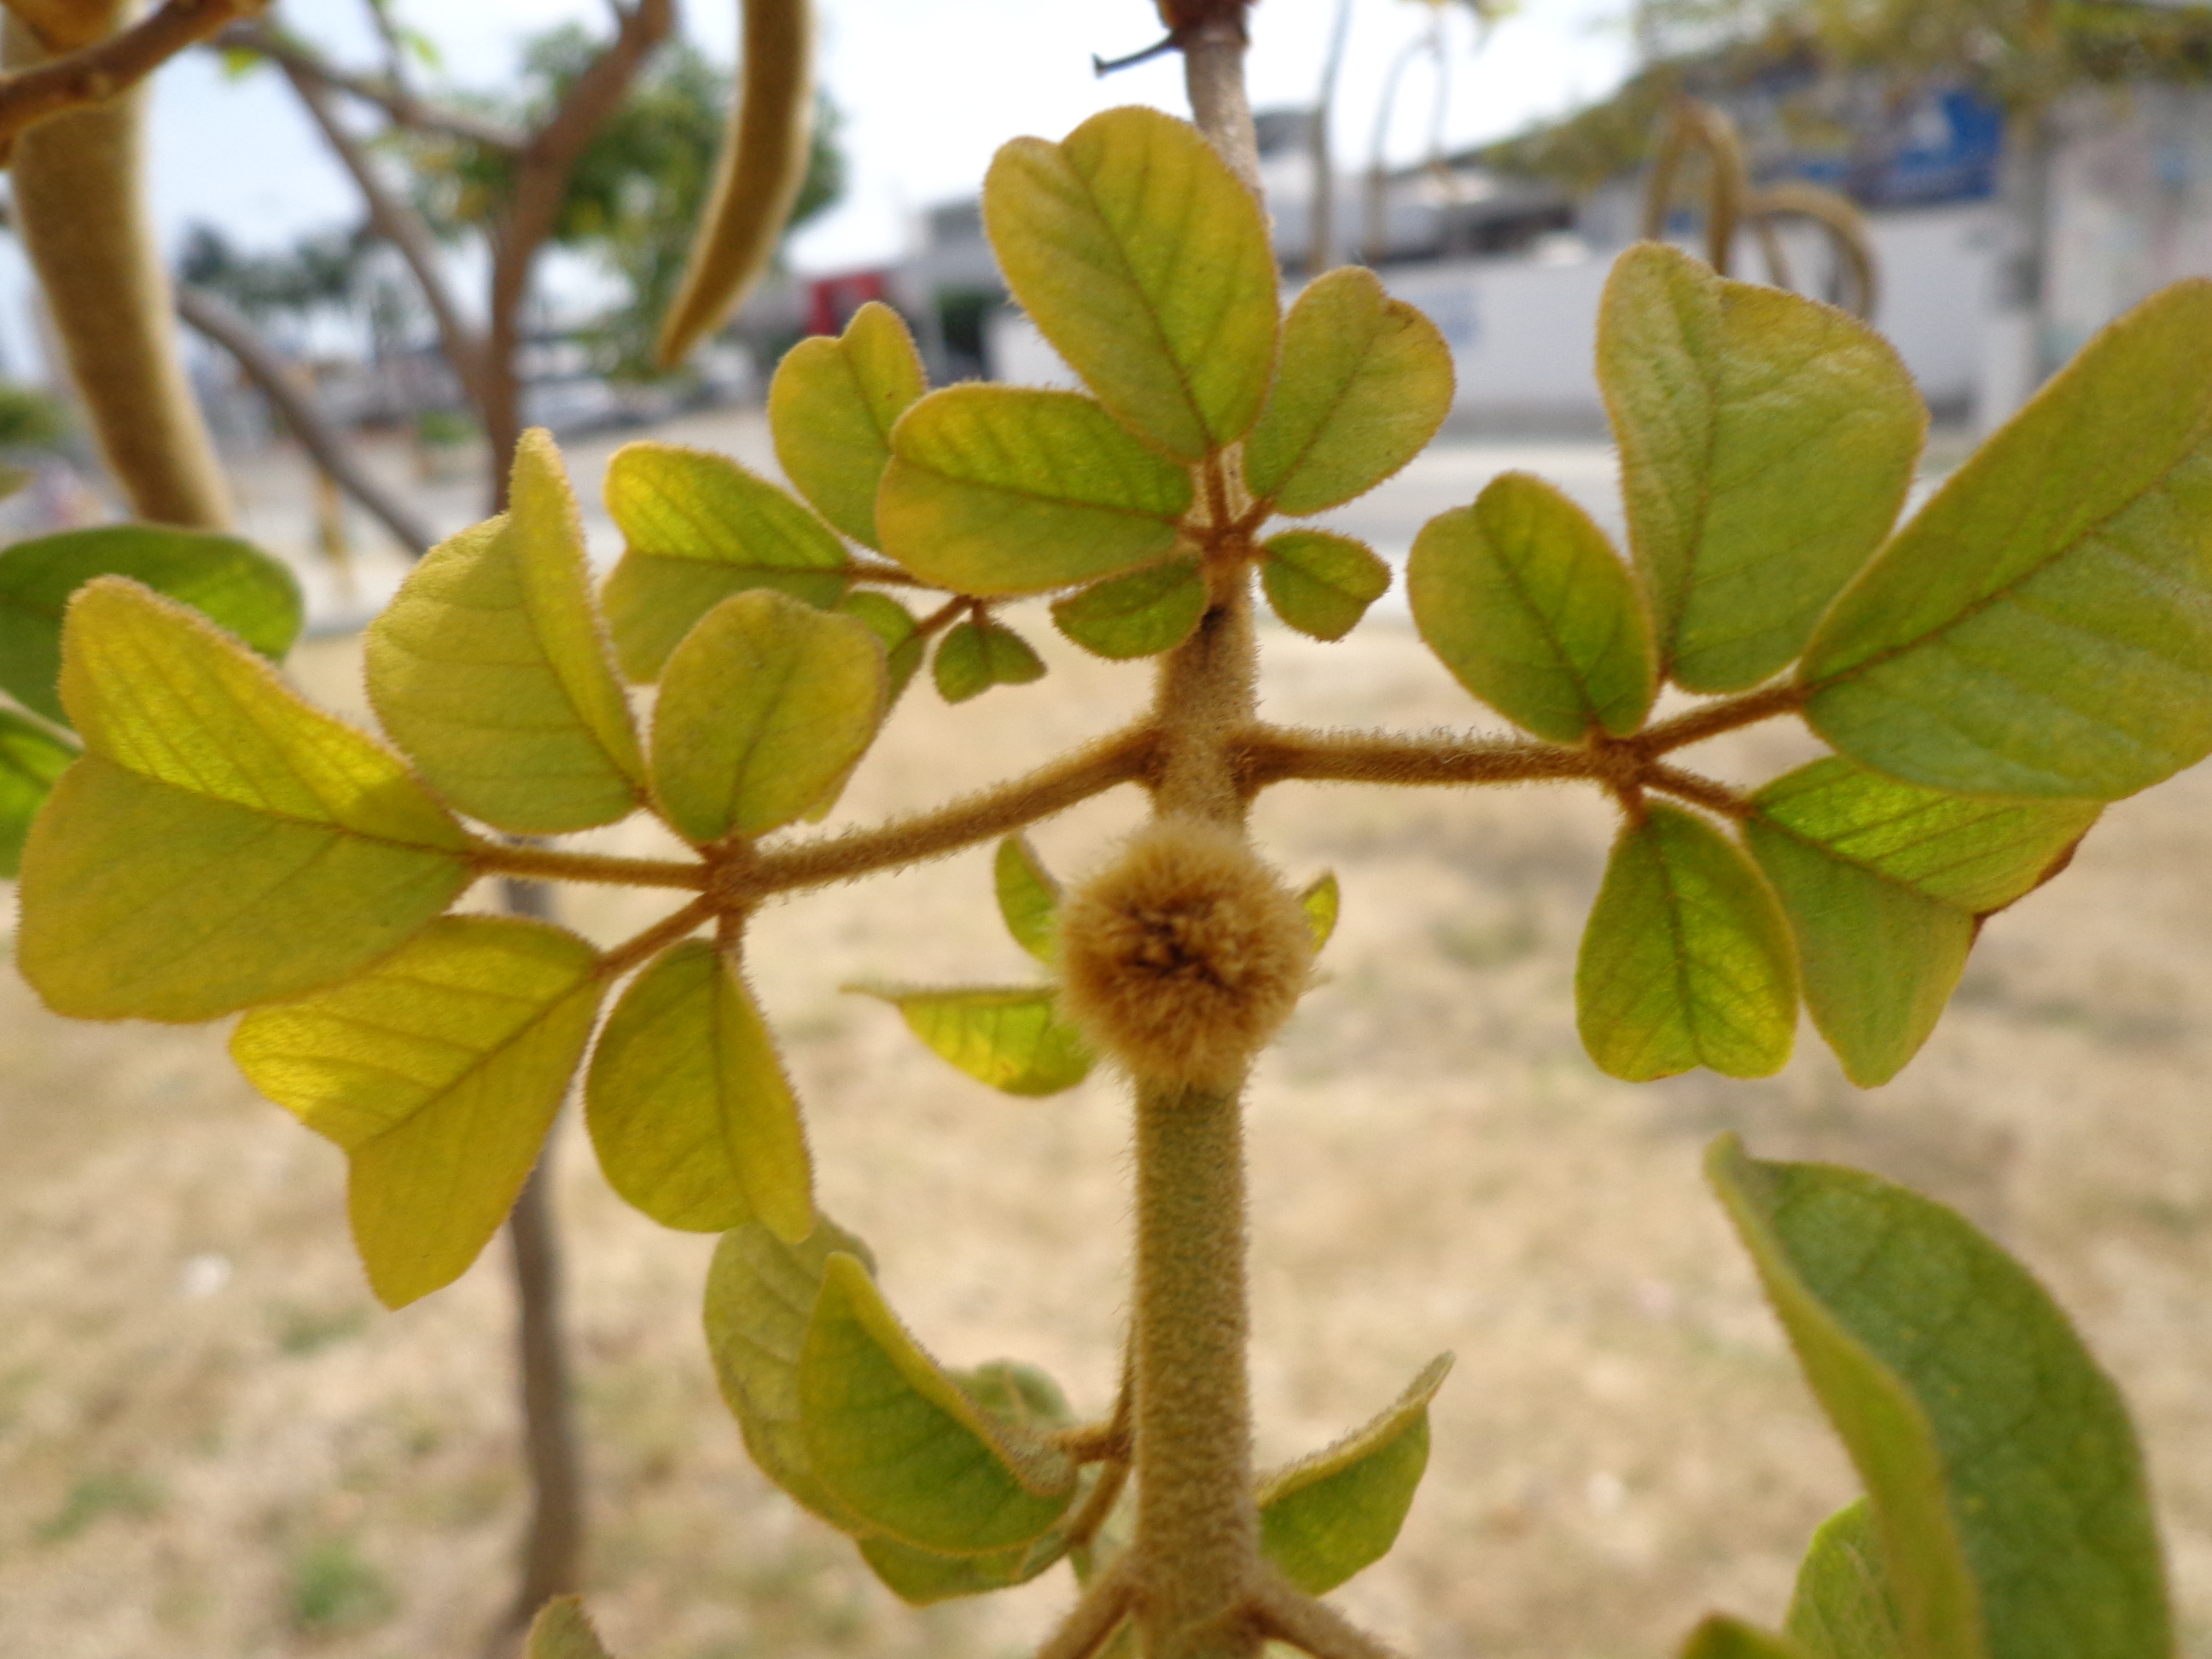 Ipê-Amarelo – Handroanthus chrysotrichus – Projeto Verde